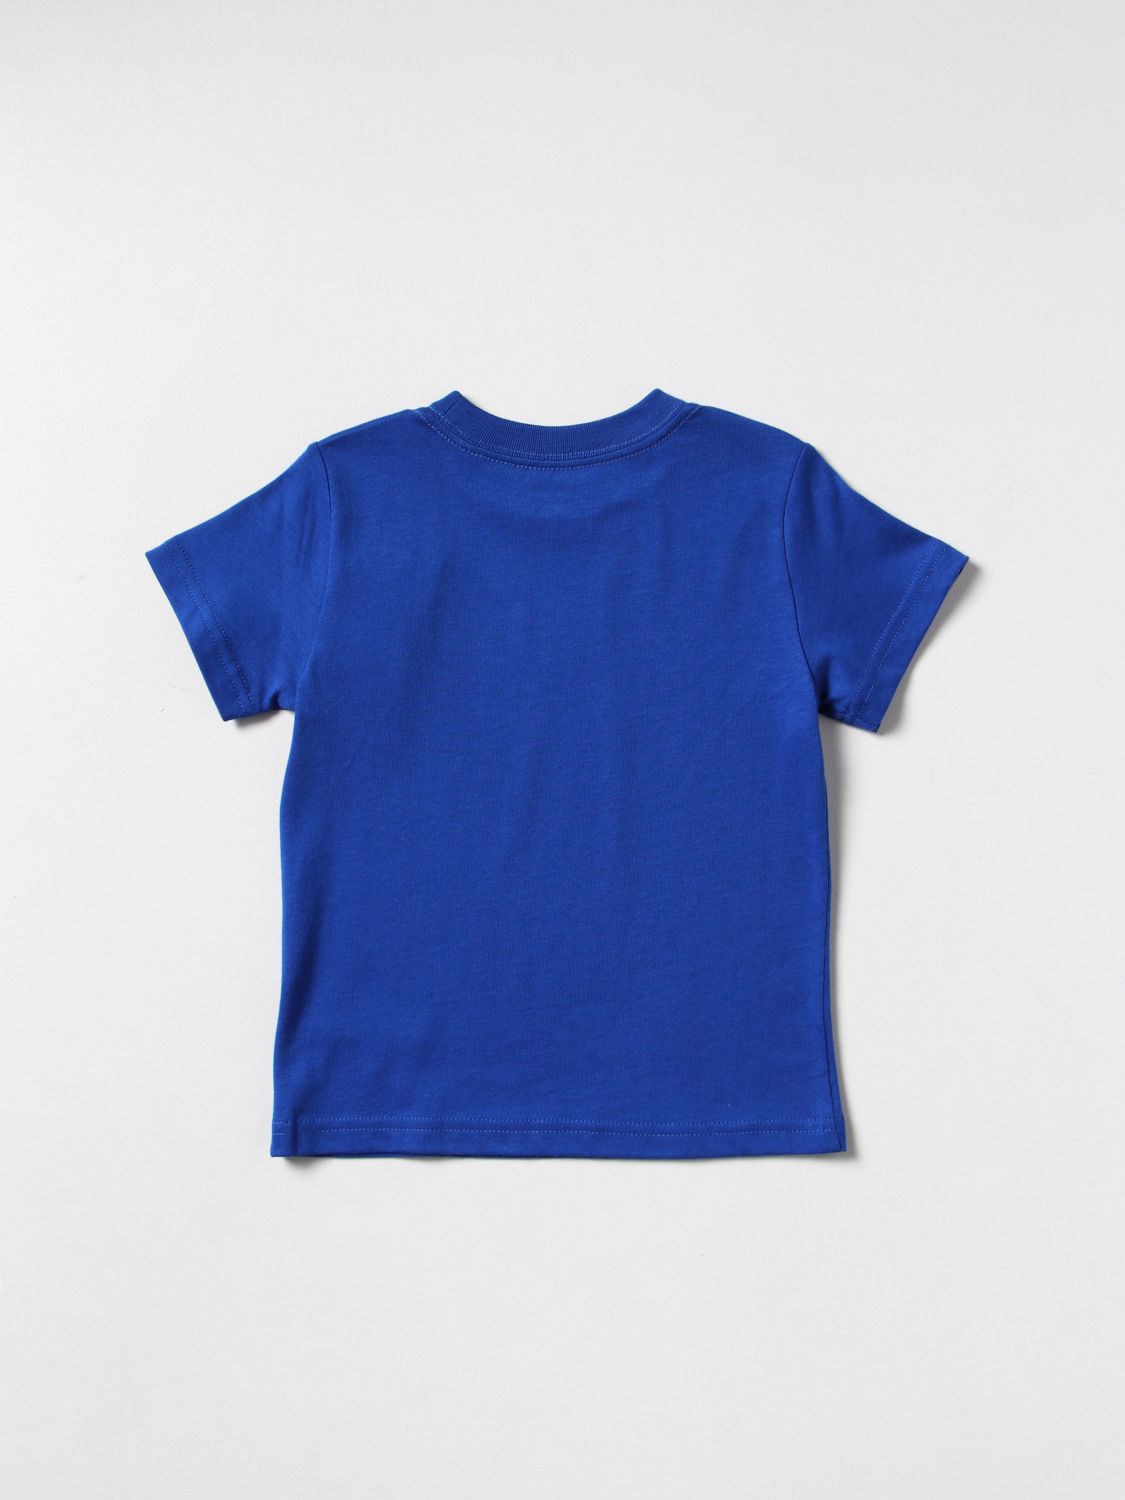 Tシャツ ポロラルフローレン: Tシャツ Polo Ralph Lauren 男の子 ロイヤルブルー 2